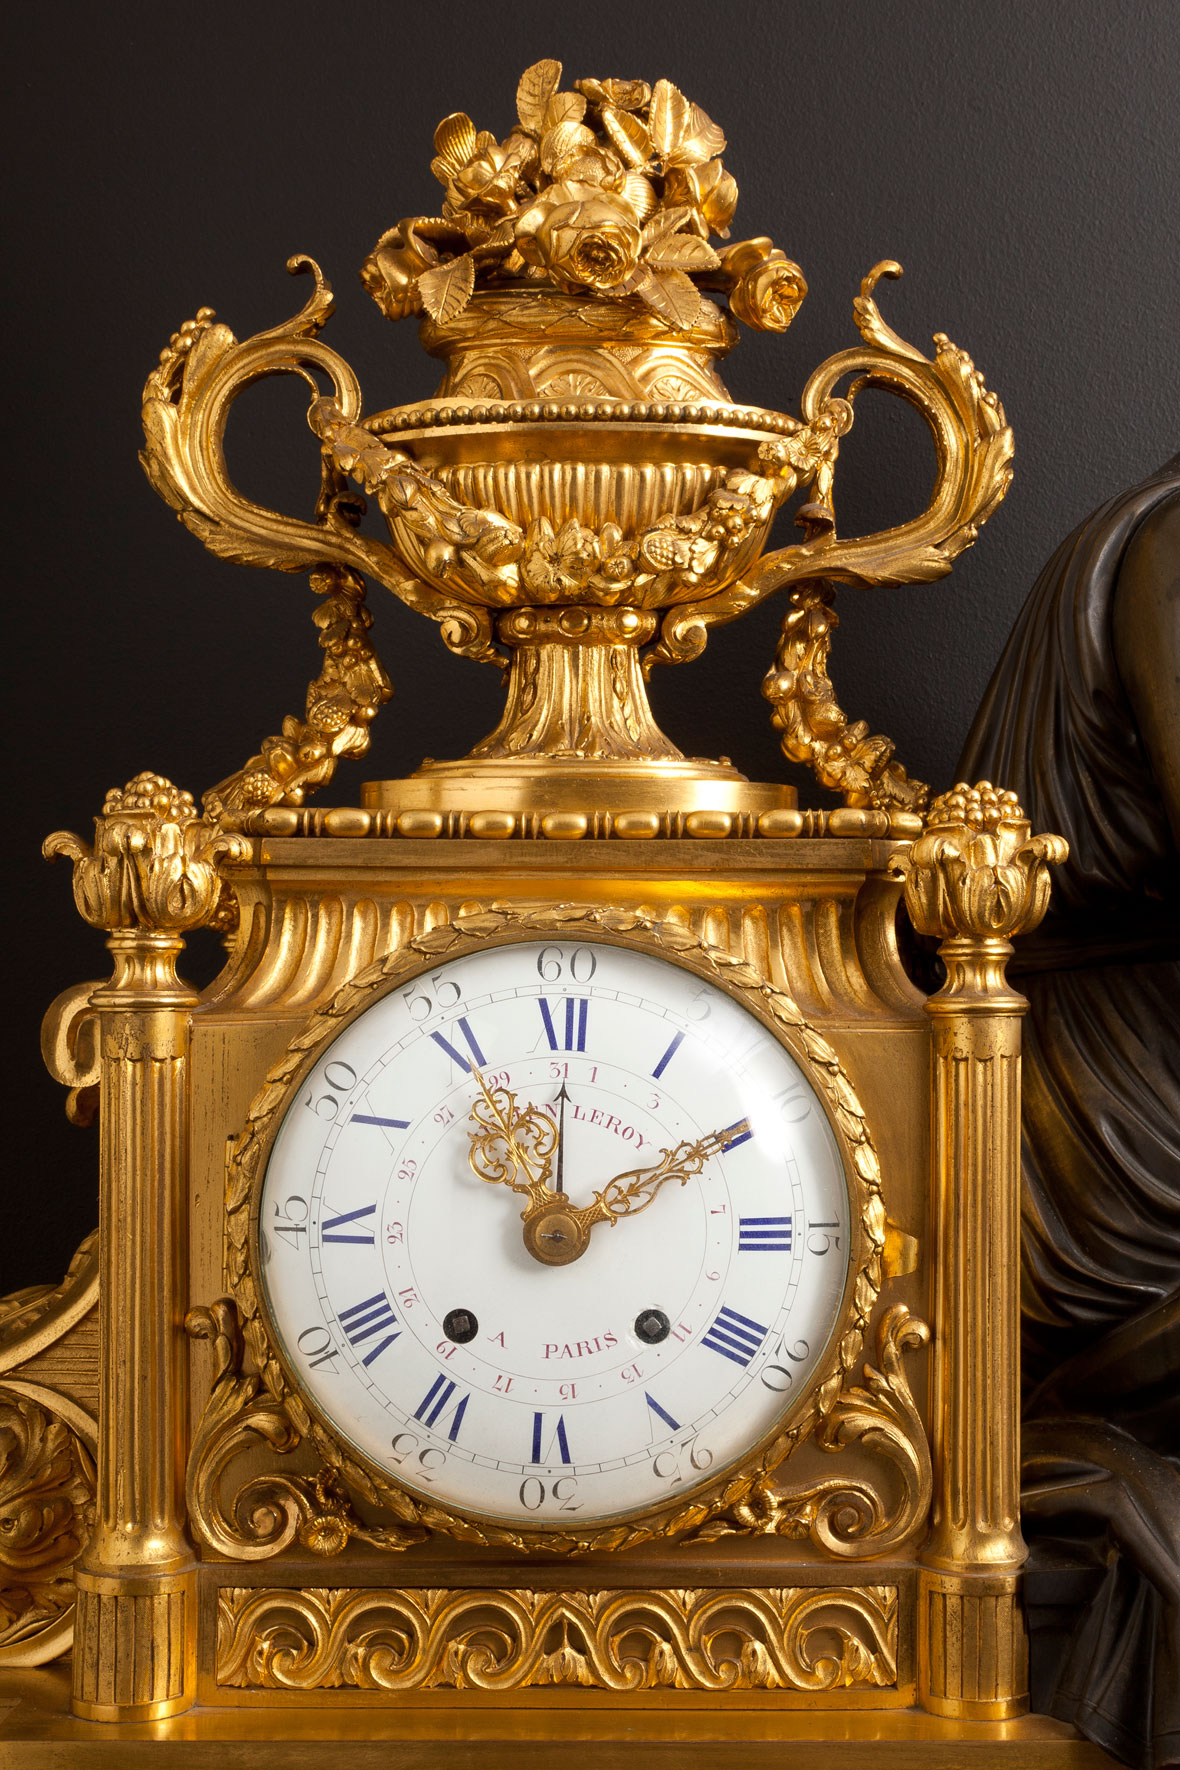 Julien Leroy Monumental Clock